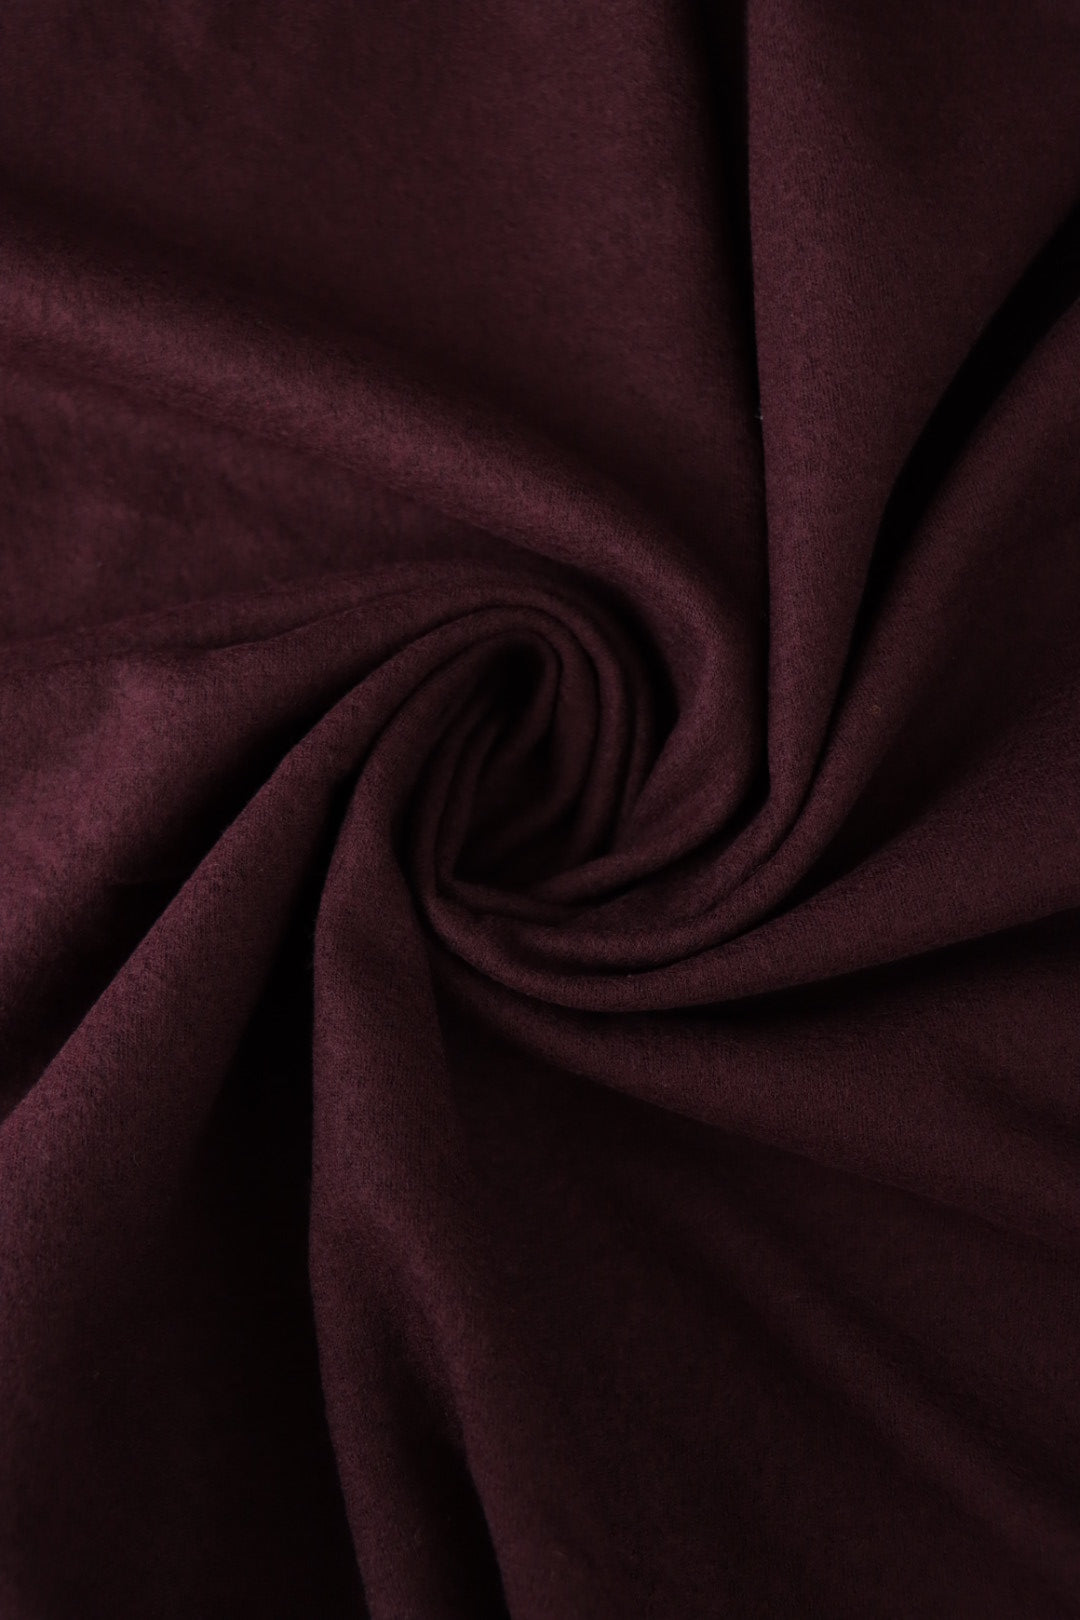 Dark Charcoal Bellevue Brushed Wool Knit